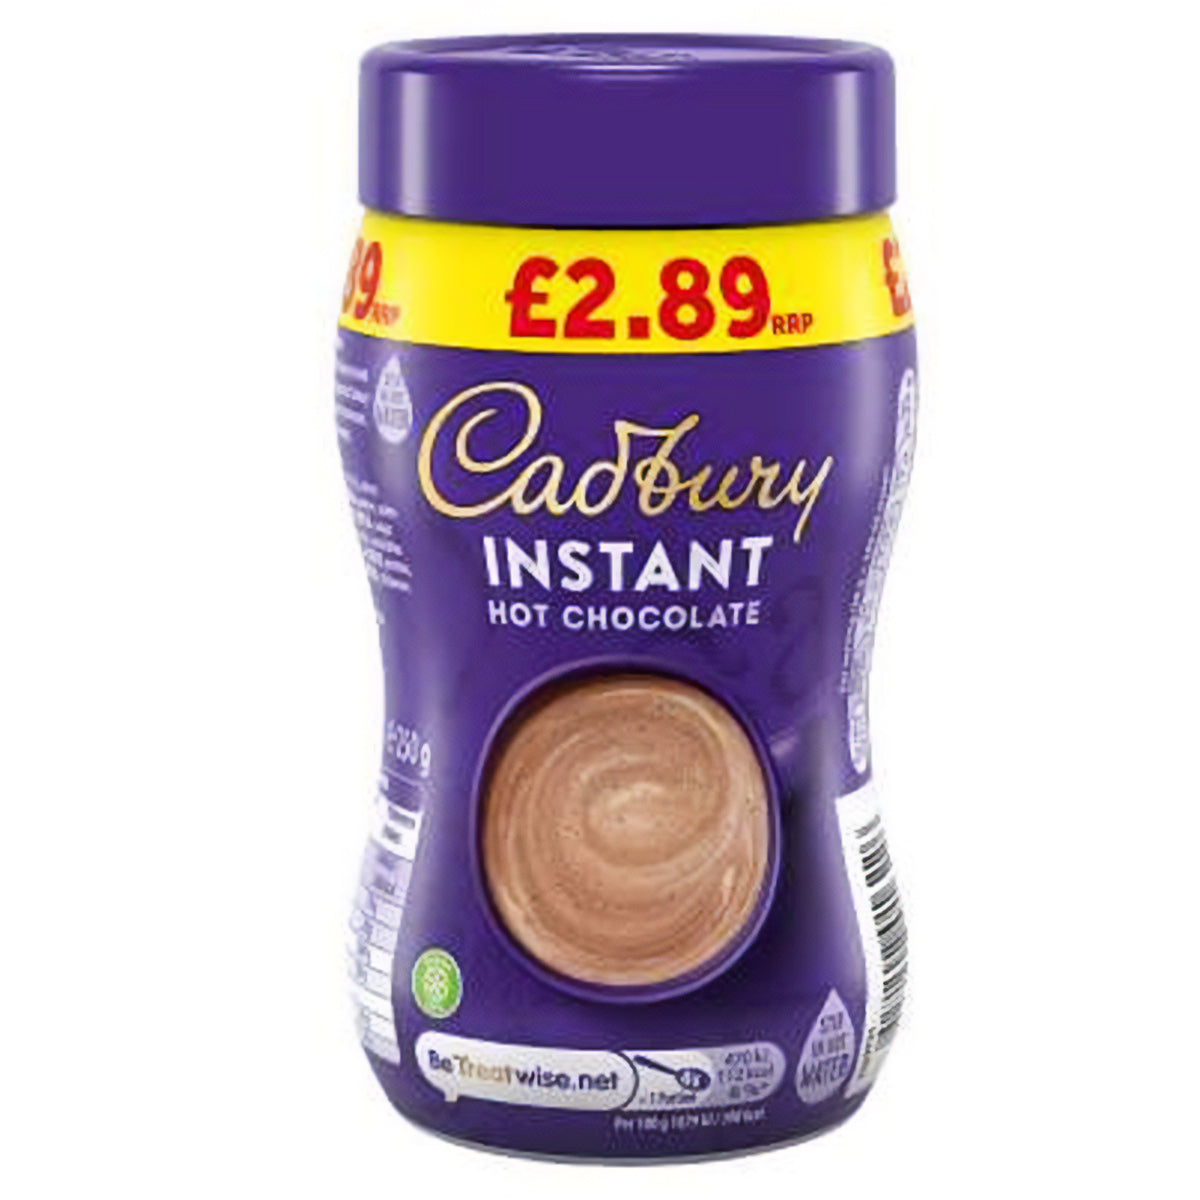 Cadbury - Instant Hot Chocolate - 250g instant hot chocolate.